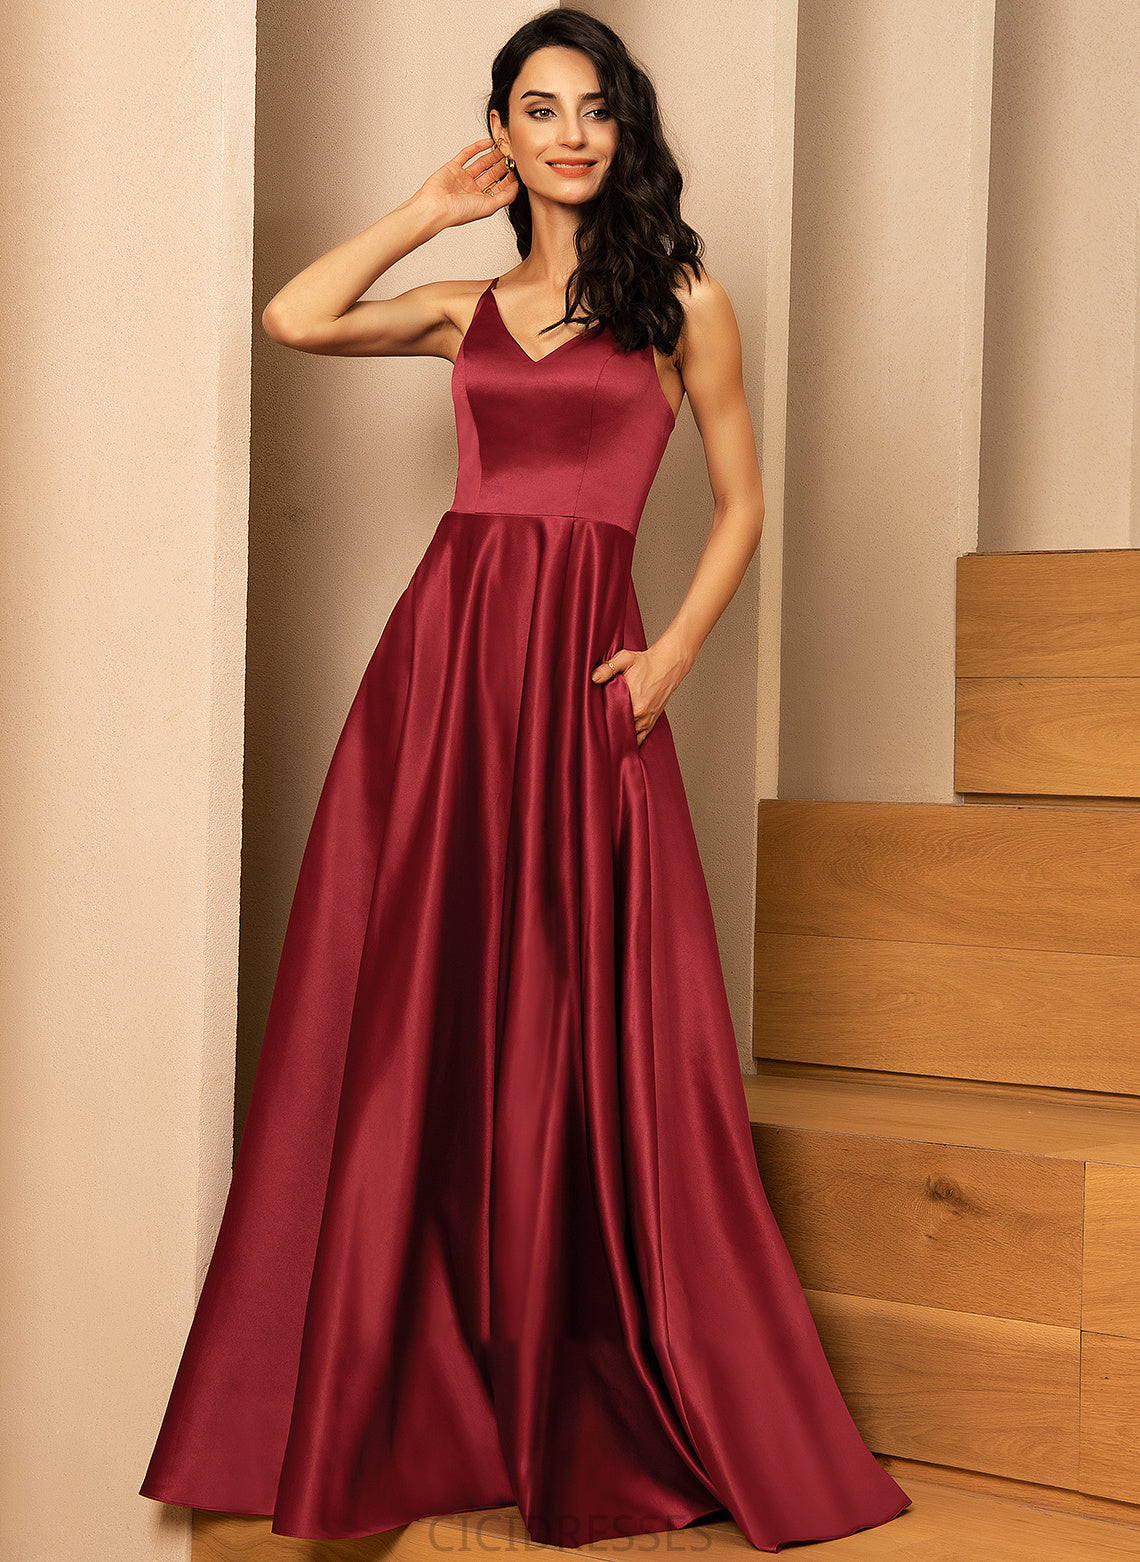 Neckline Embellishment Pockets A-Line Floor-Length Silhouette Length V-neck Fabric Jayda Natural Waist Sleeveless Bridesmaid Dresses